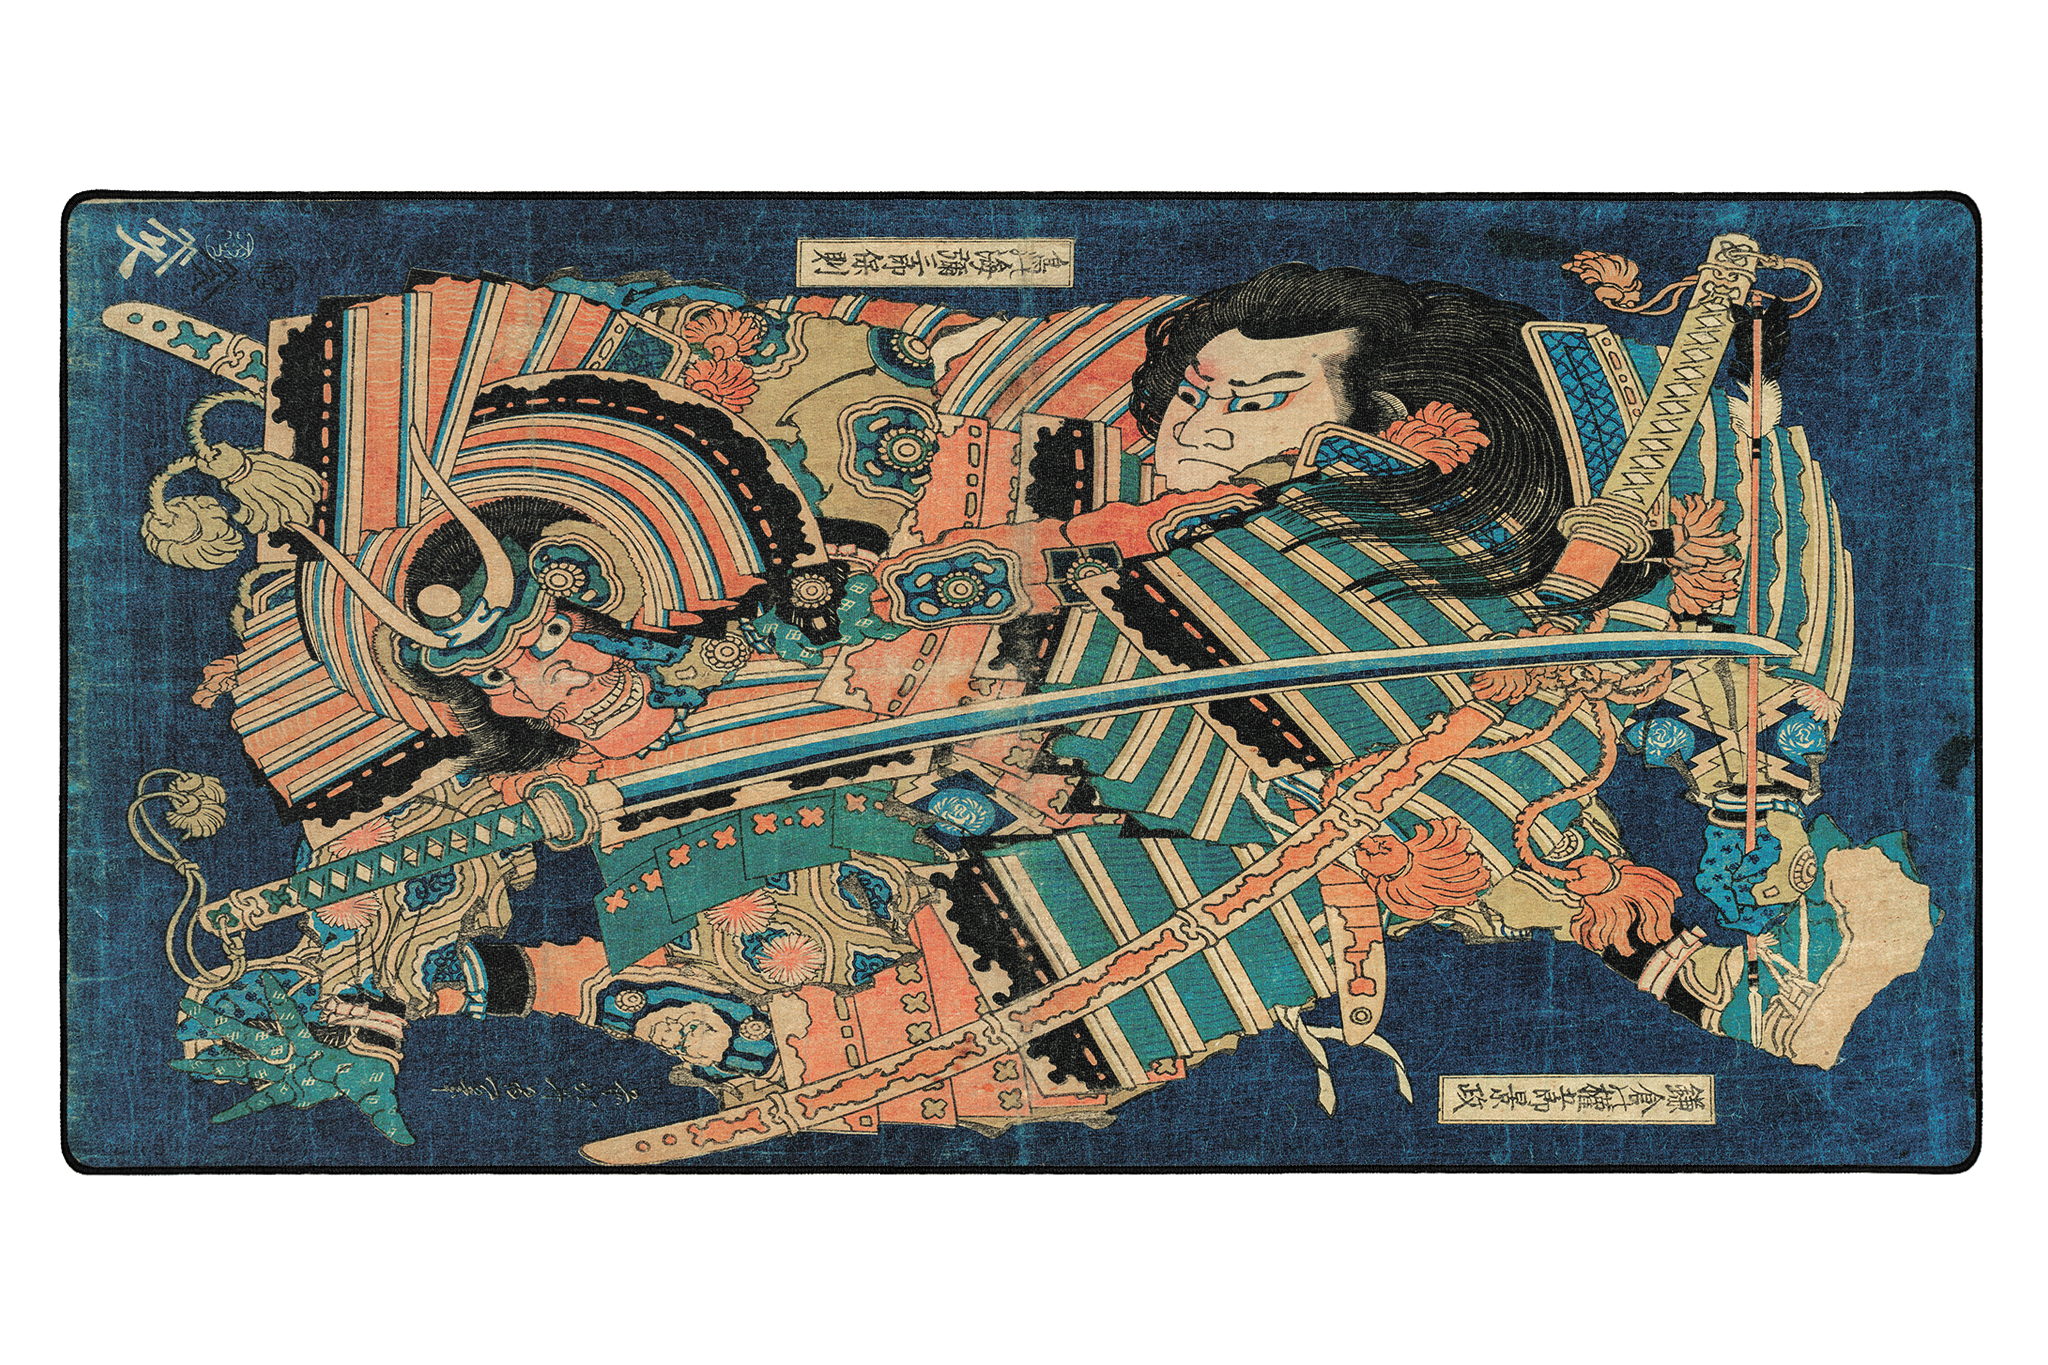 Kamakura no Gengoro, by Hokusai - The Mousepad Company